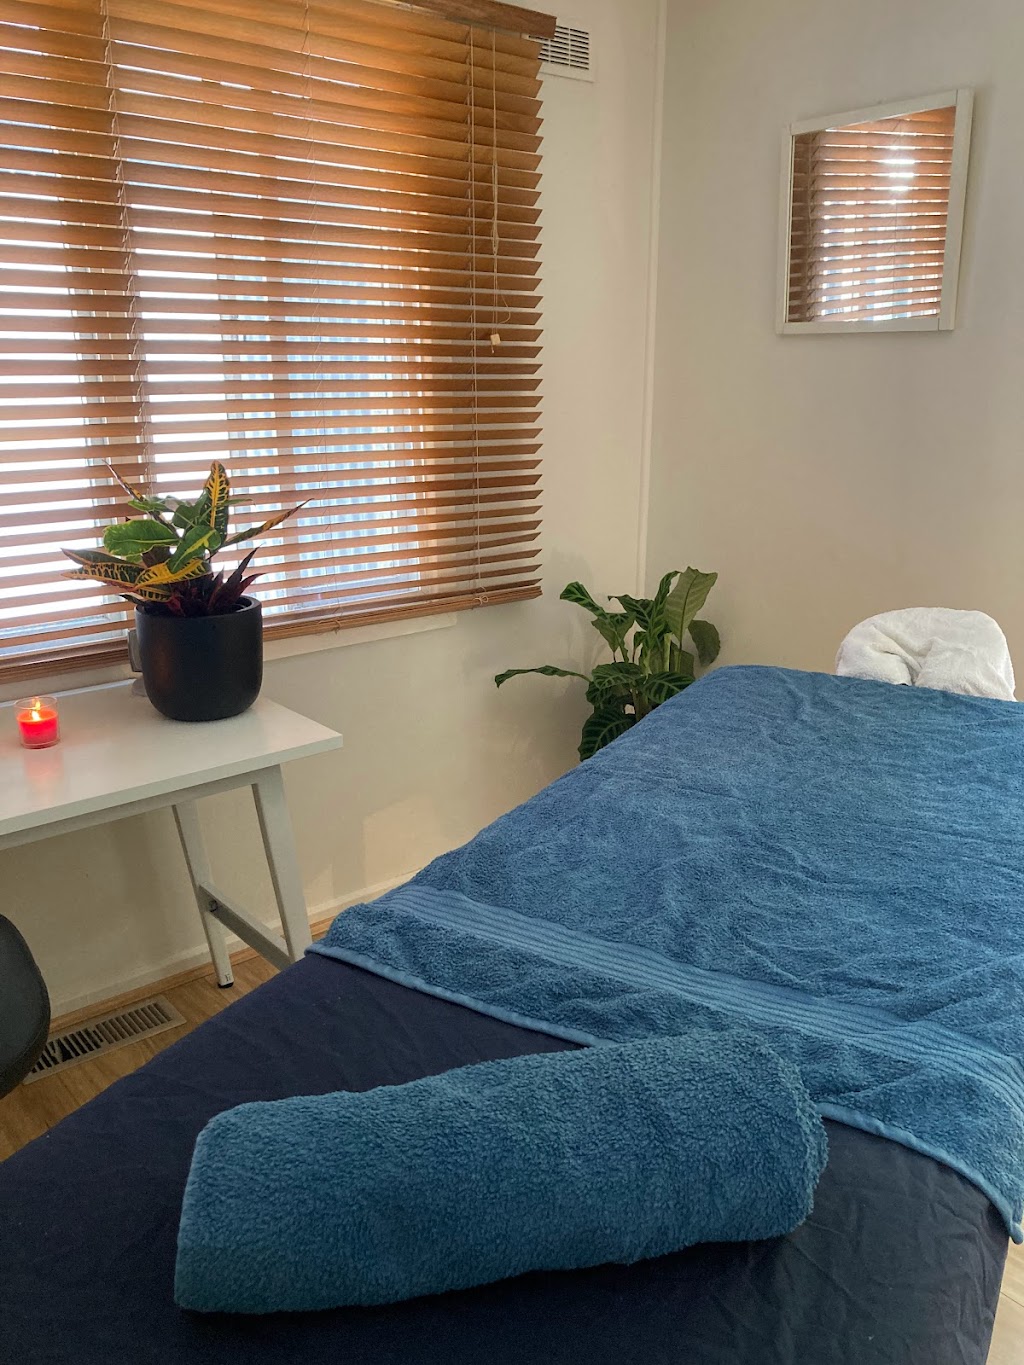 Unwind Massage Canberra | point of interest | 28 Padbury St, Downer ACT 2602, Australia | 0407252443 OR +61 407 252 443